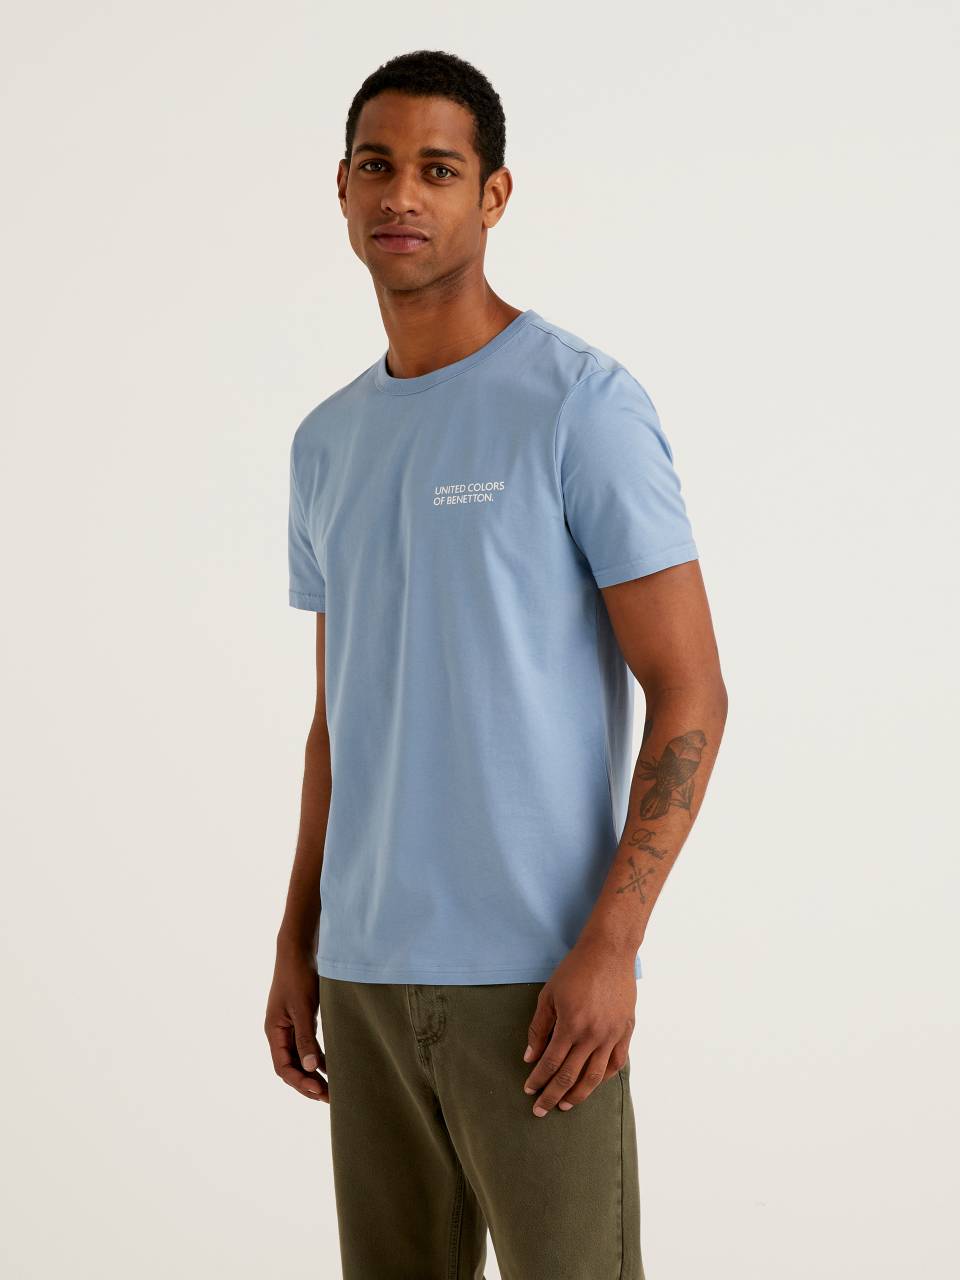 Benetton Air force blue t-shirt with logo print. 1